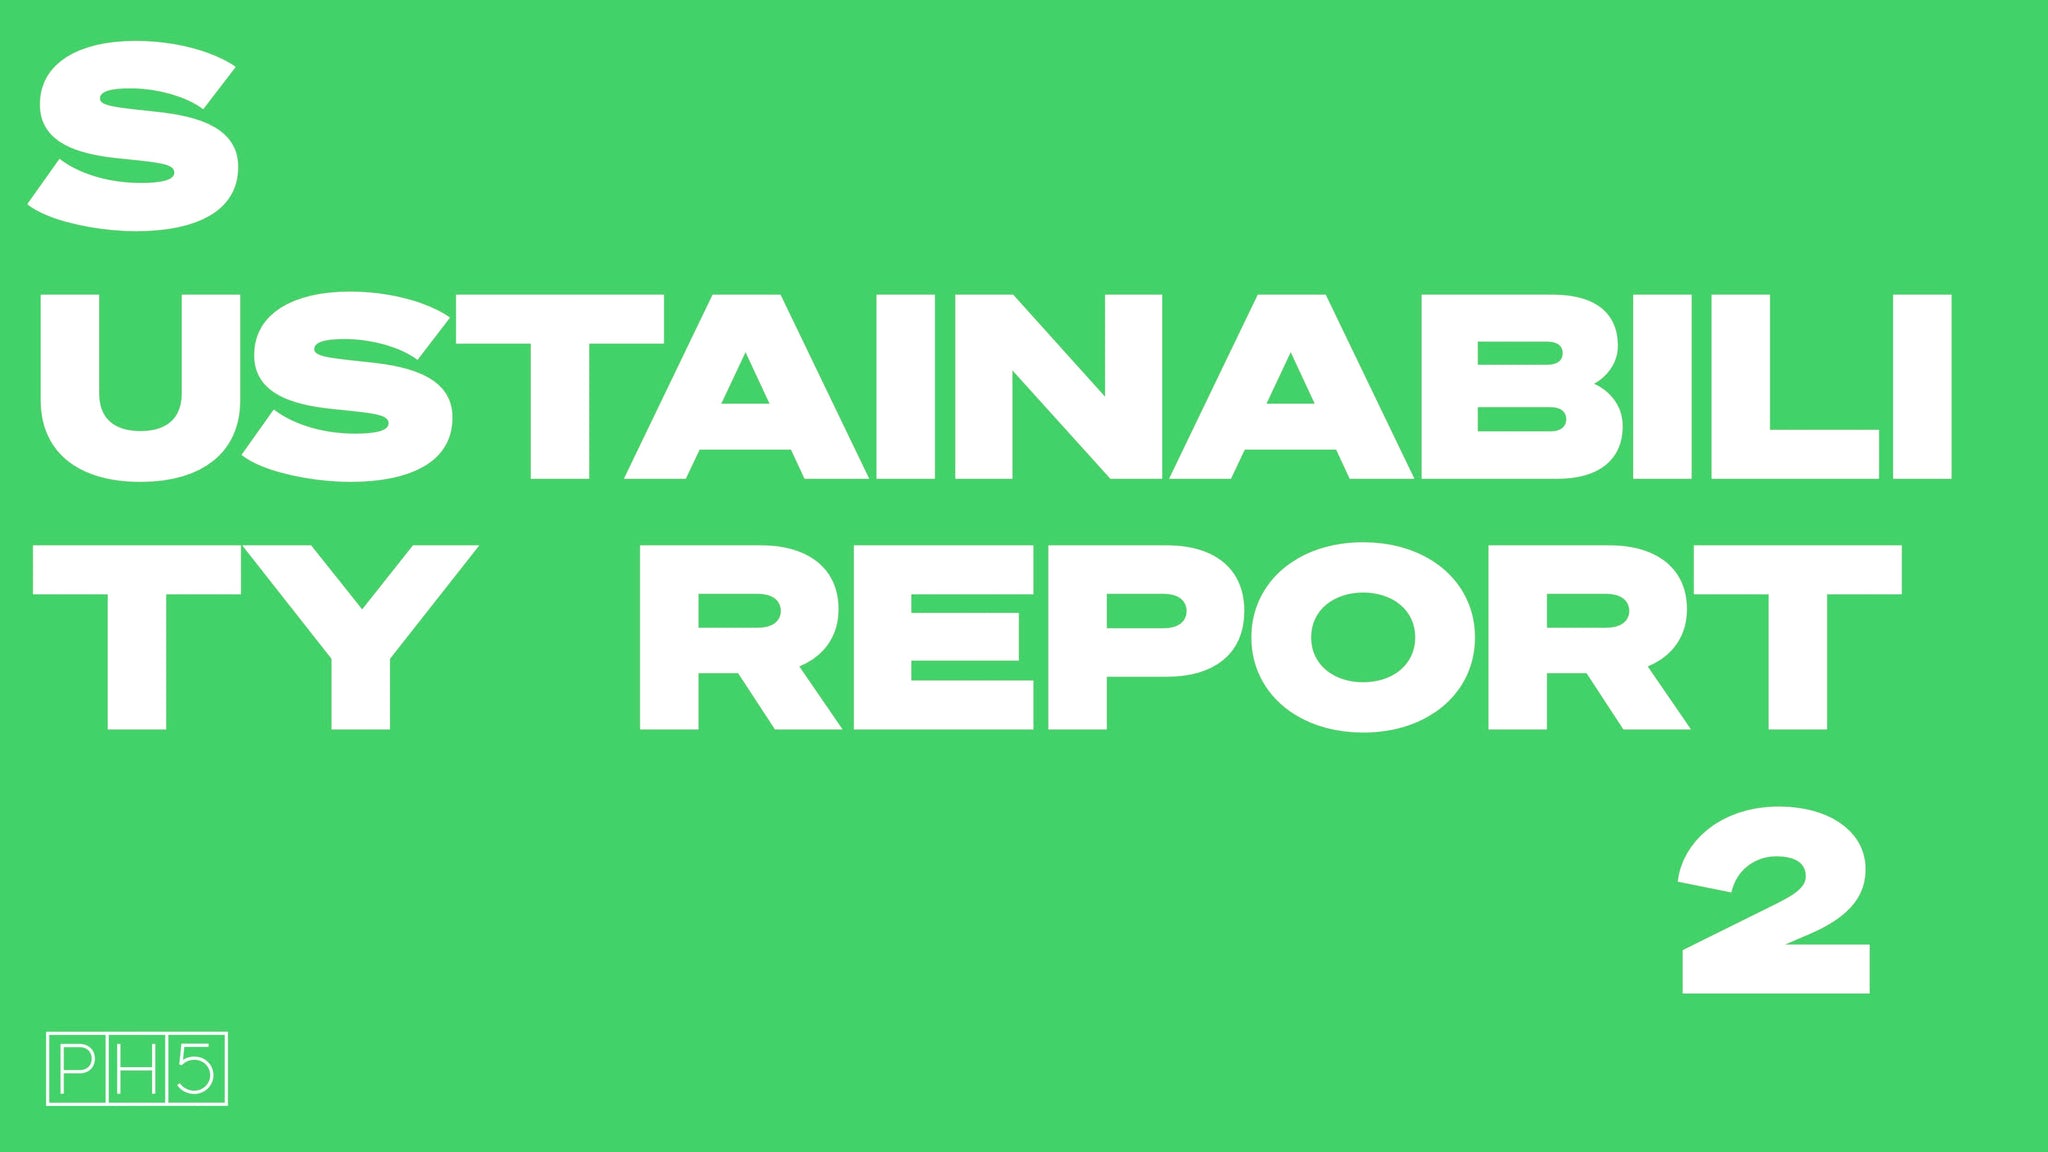 PH5 2022 Sustainability Report